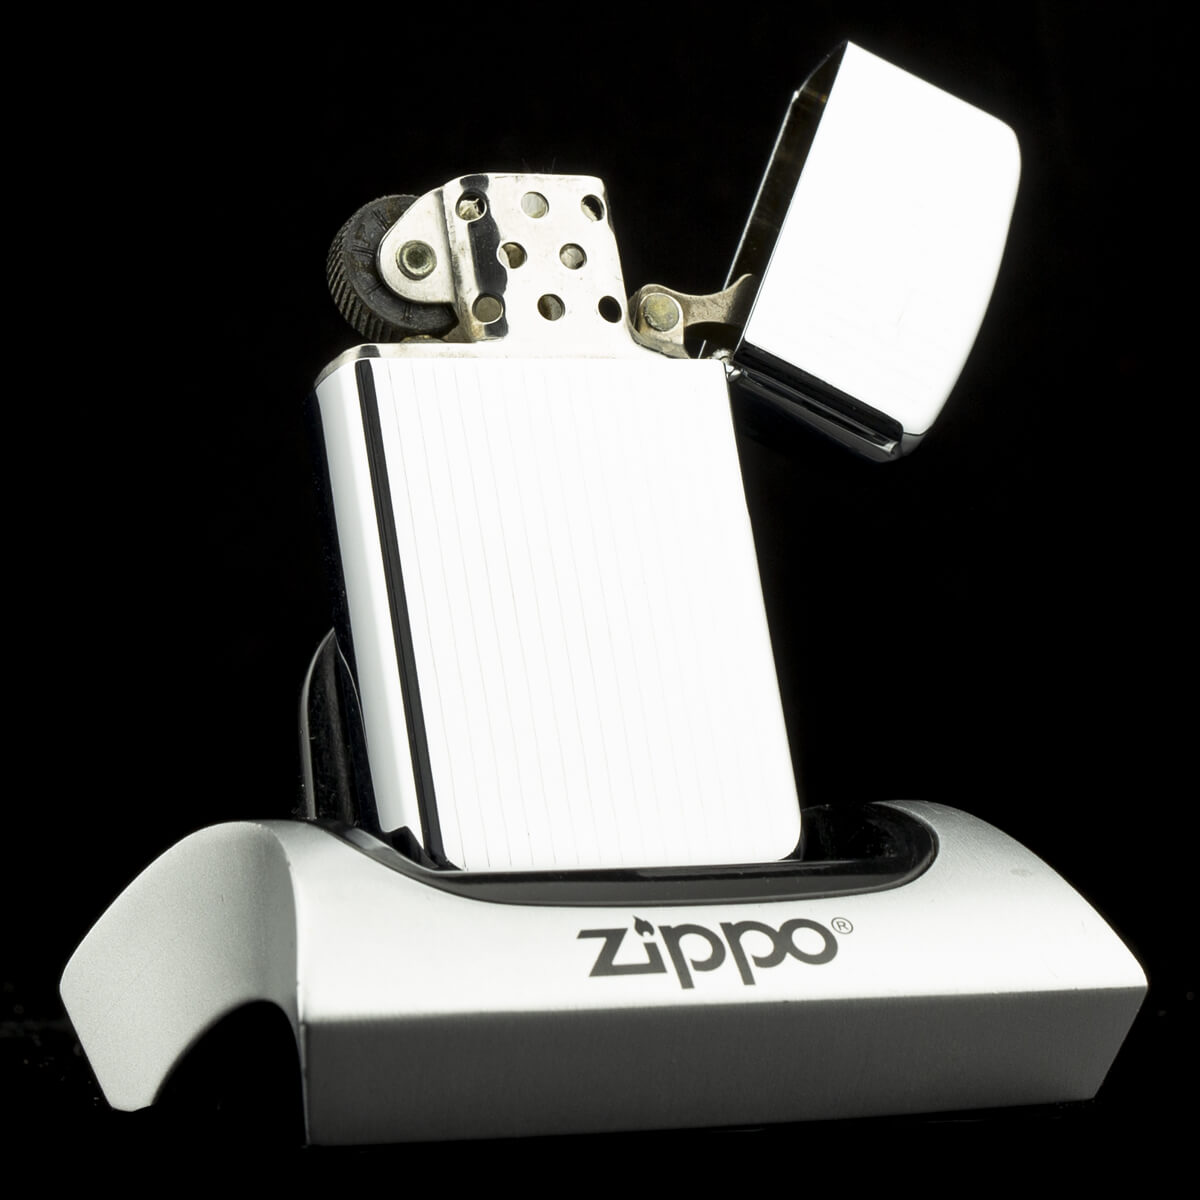 bat-lua-zippo-slim-striped-1980-soc-2-mat-zippo-mini